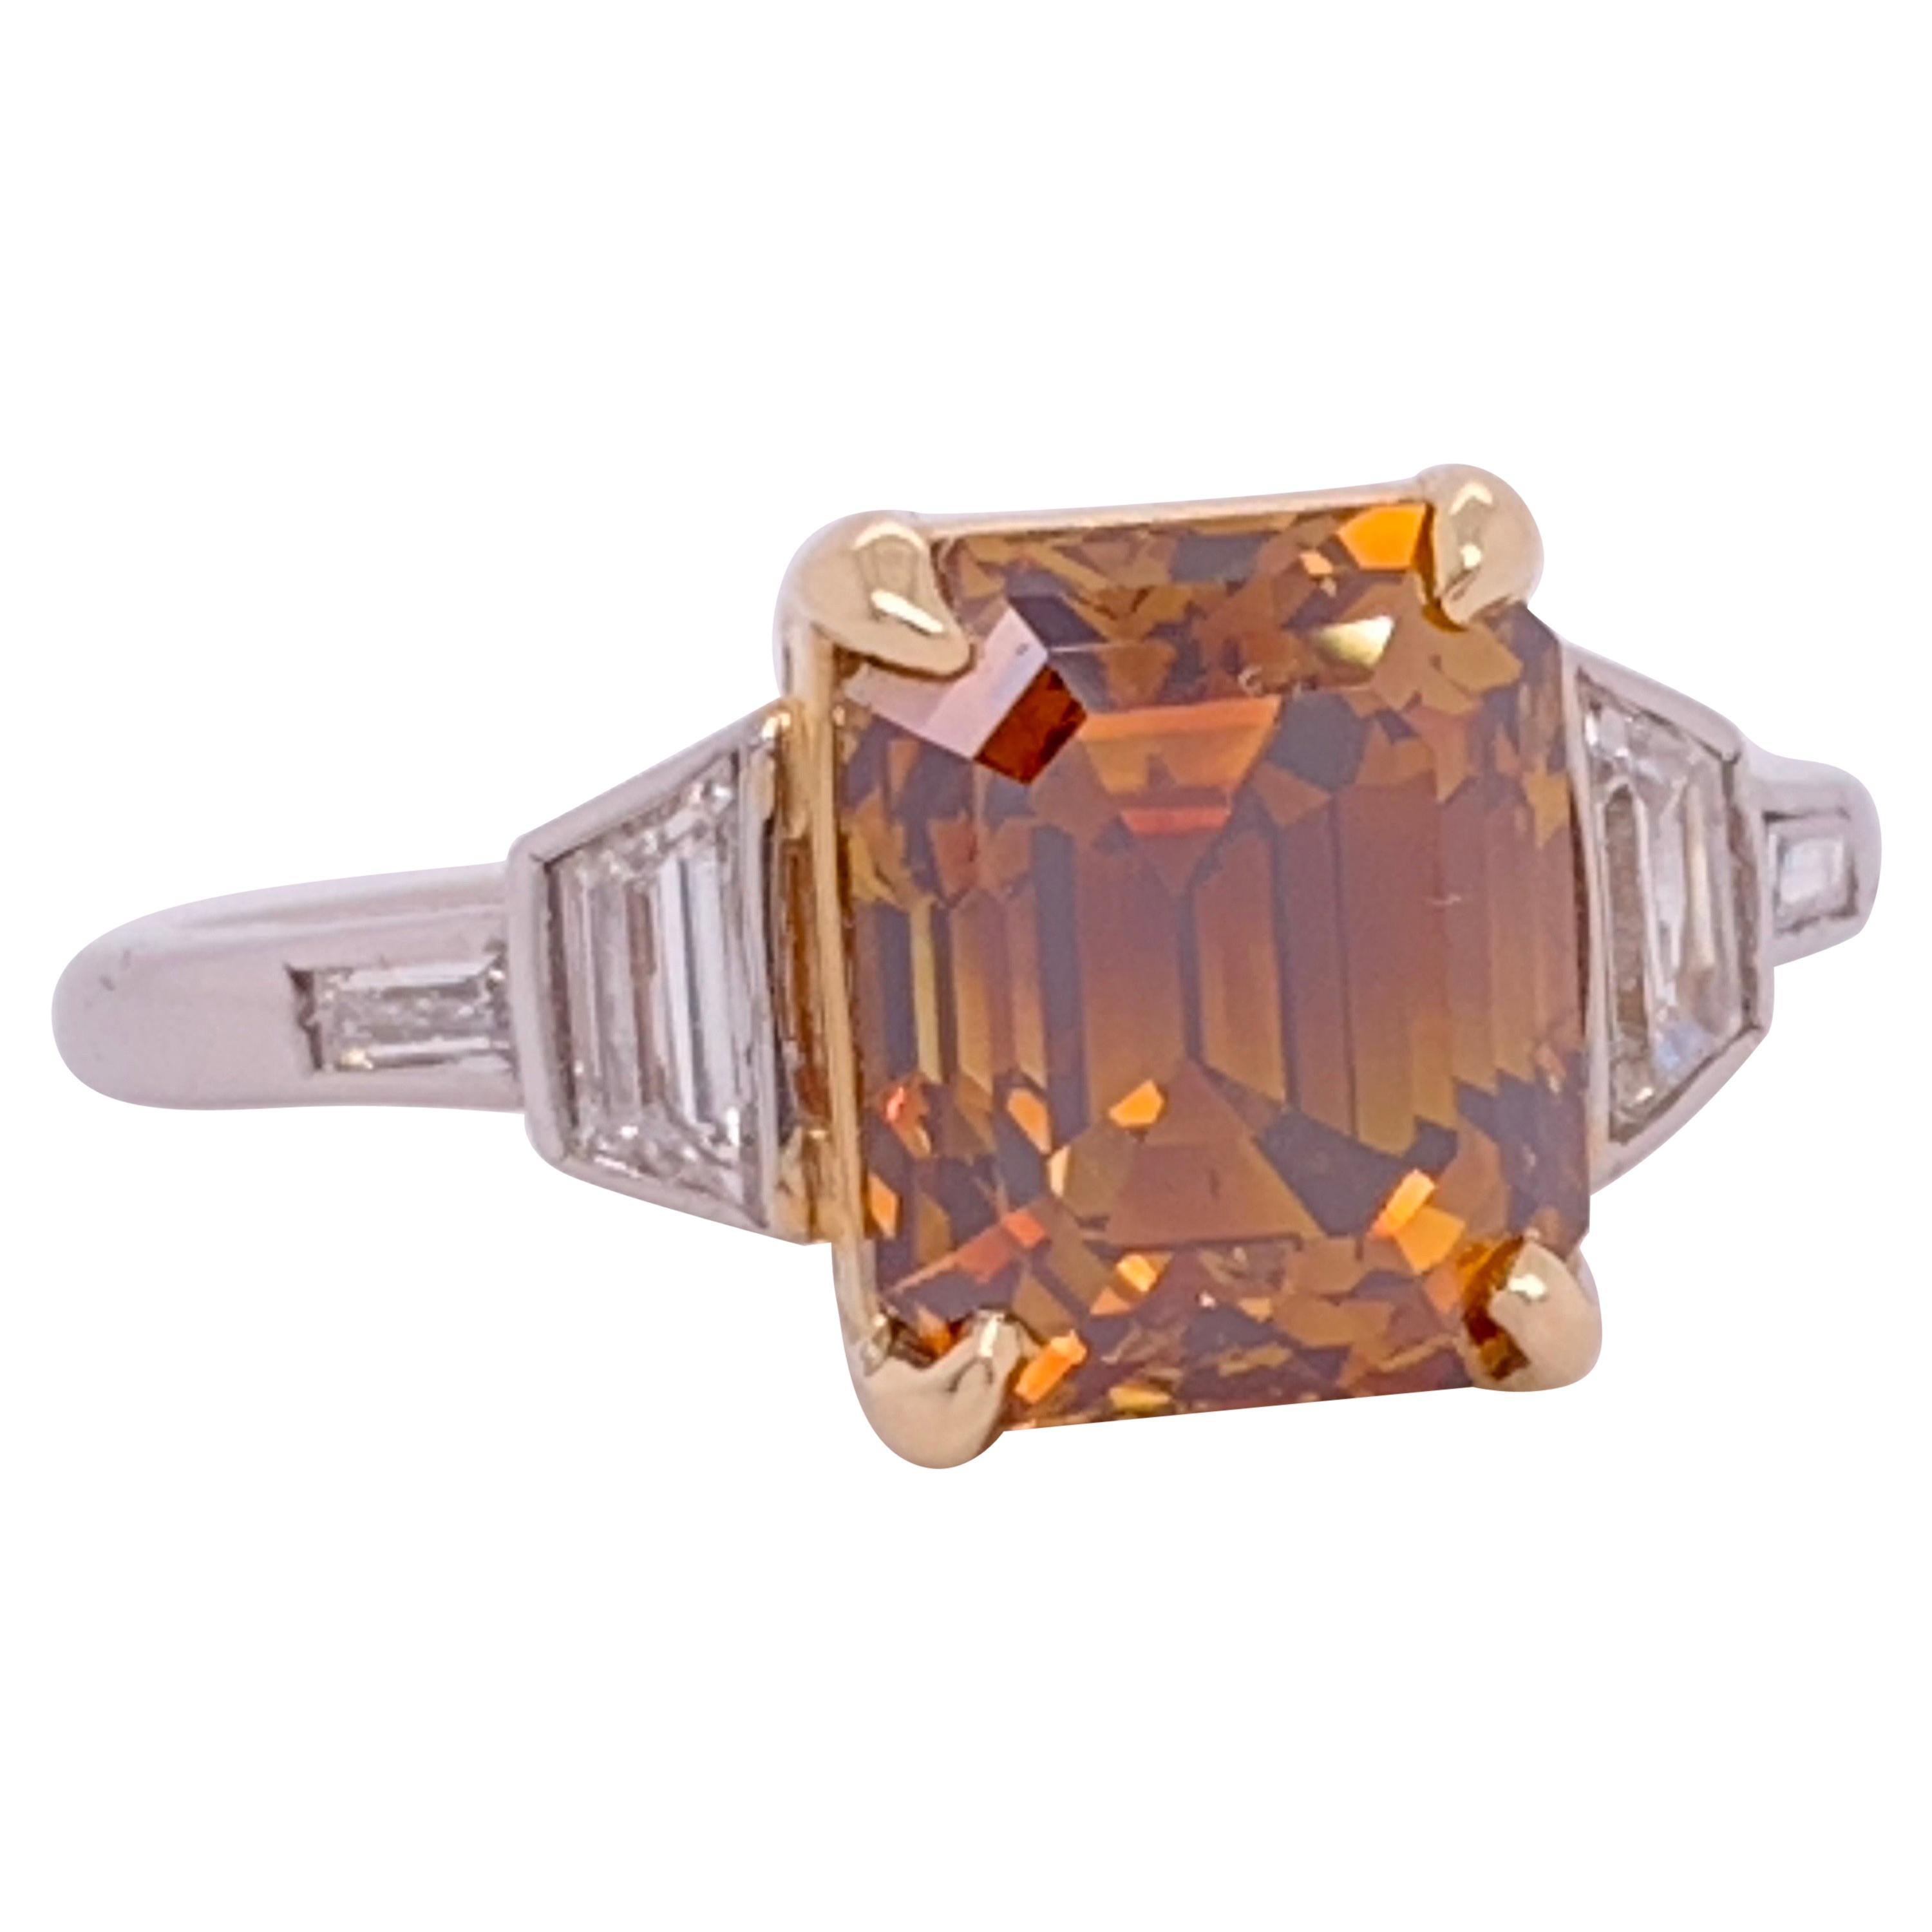 Platinum Natural Emerald Cut Diamond Ring GIA 3.37 Carat Fancy Deep Orange-Brown